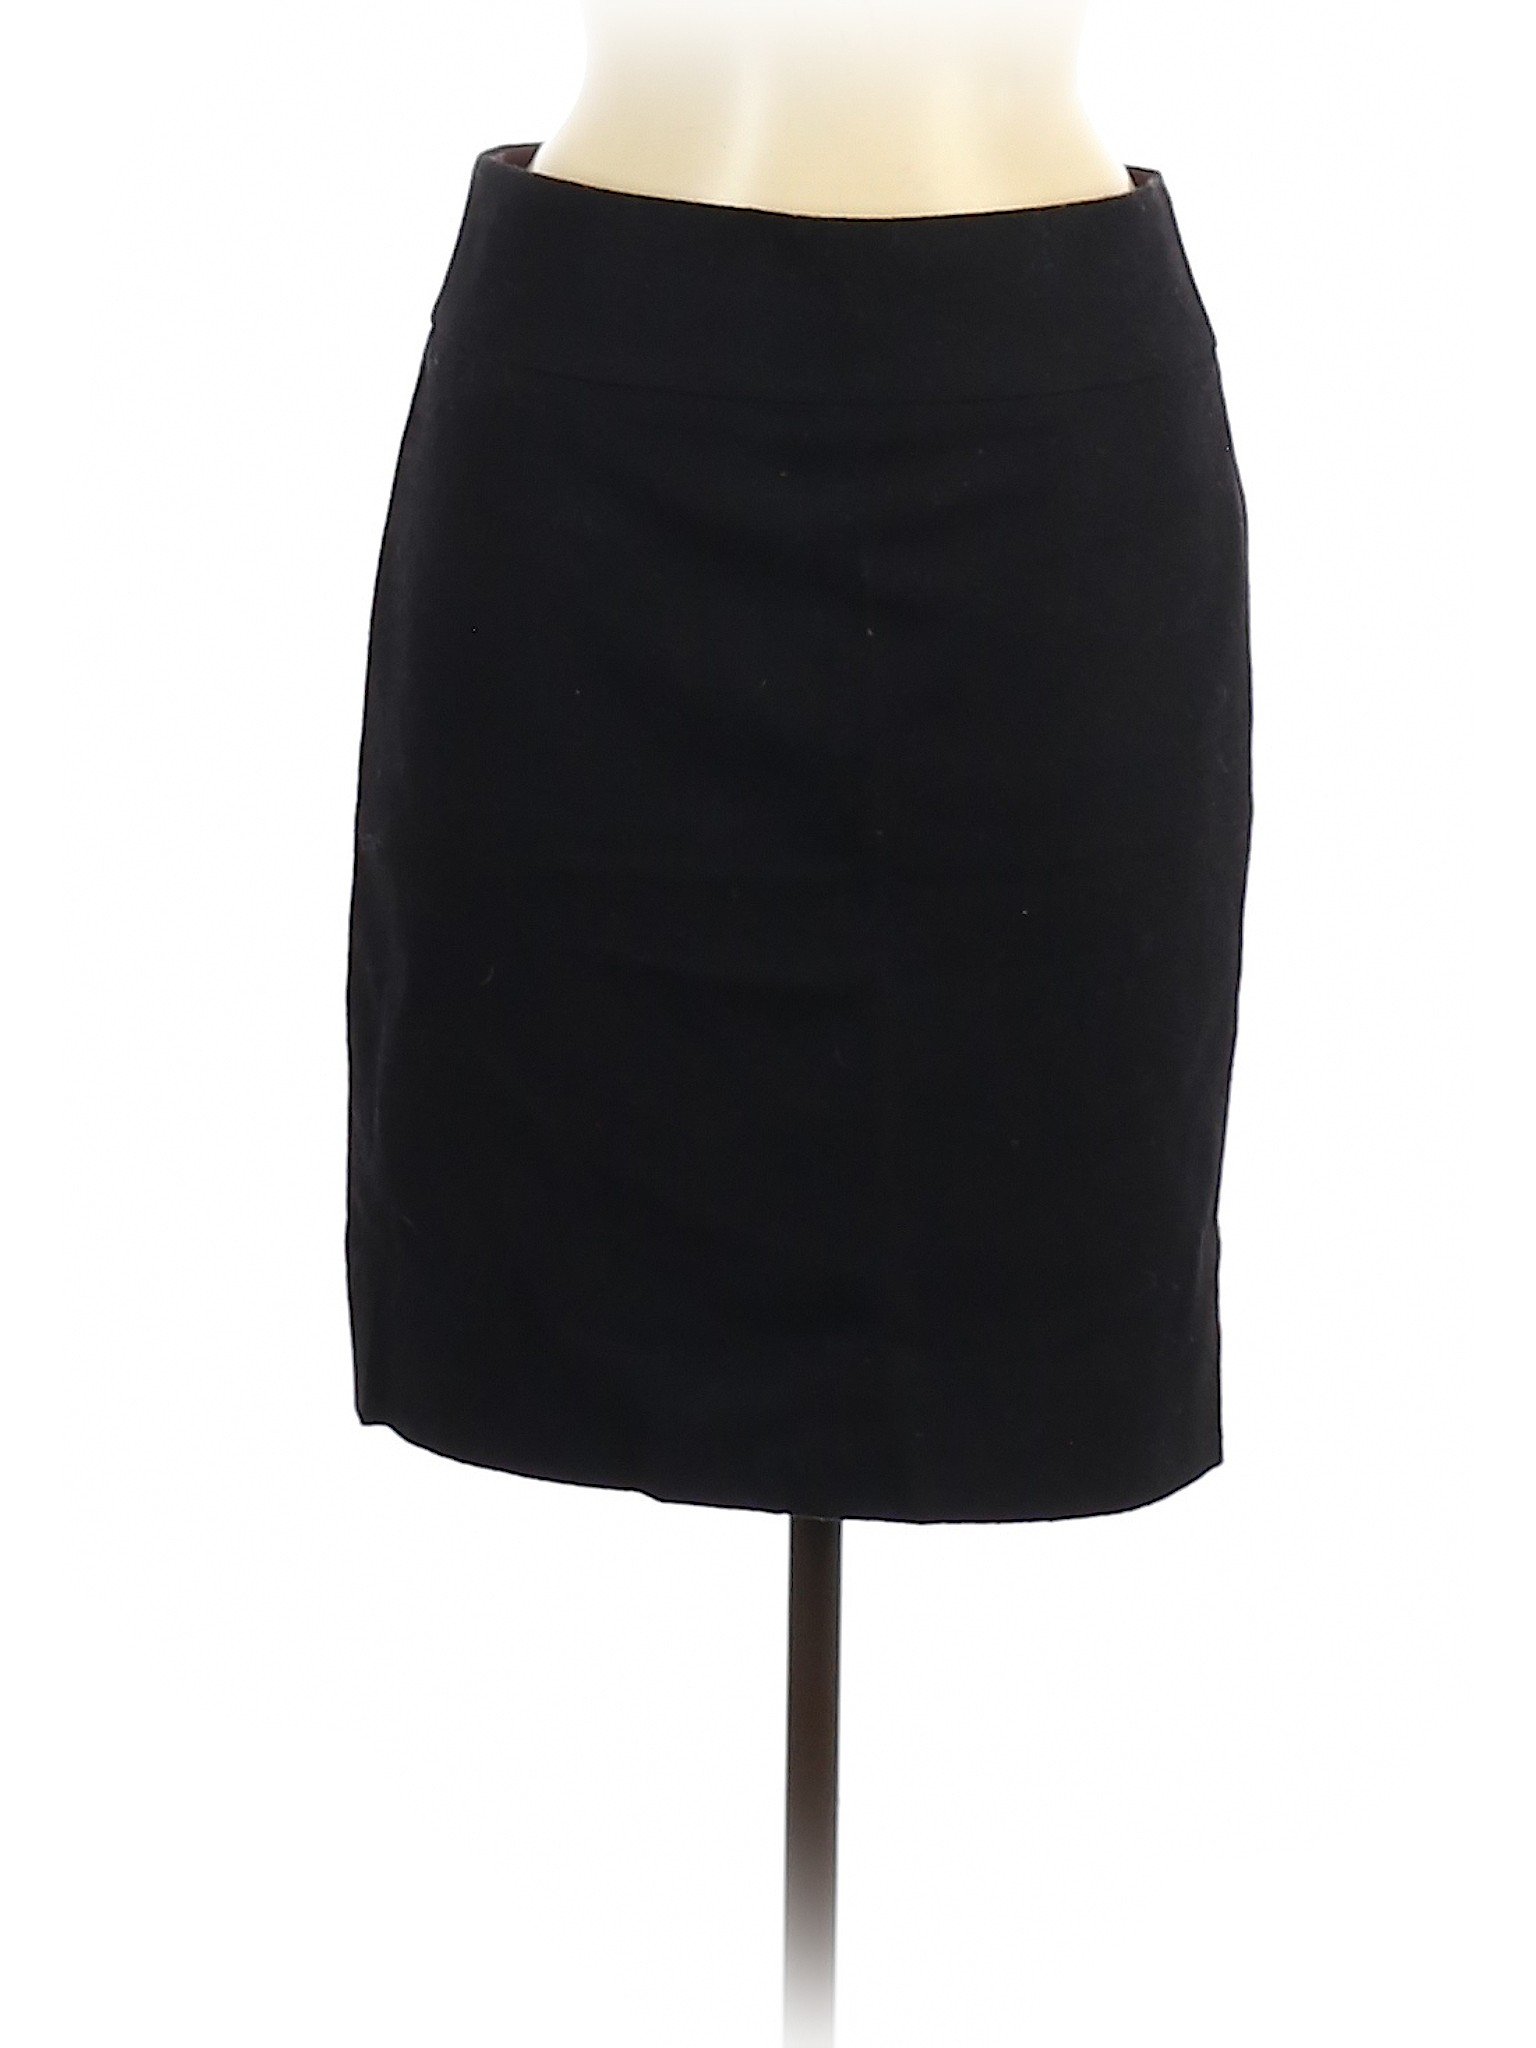 Banana Republic Women Black Casual Skirt 6 Petites | eBay